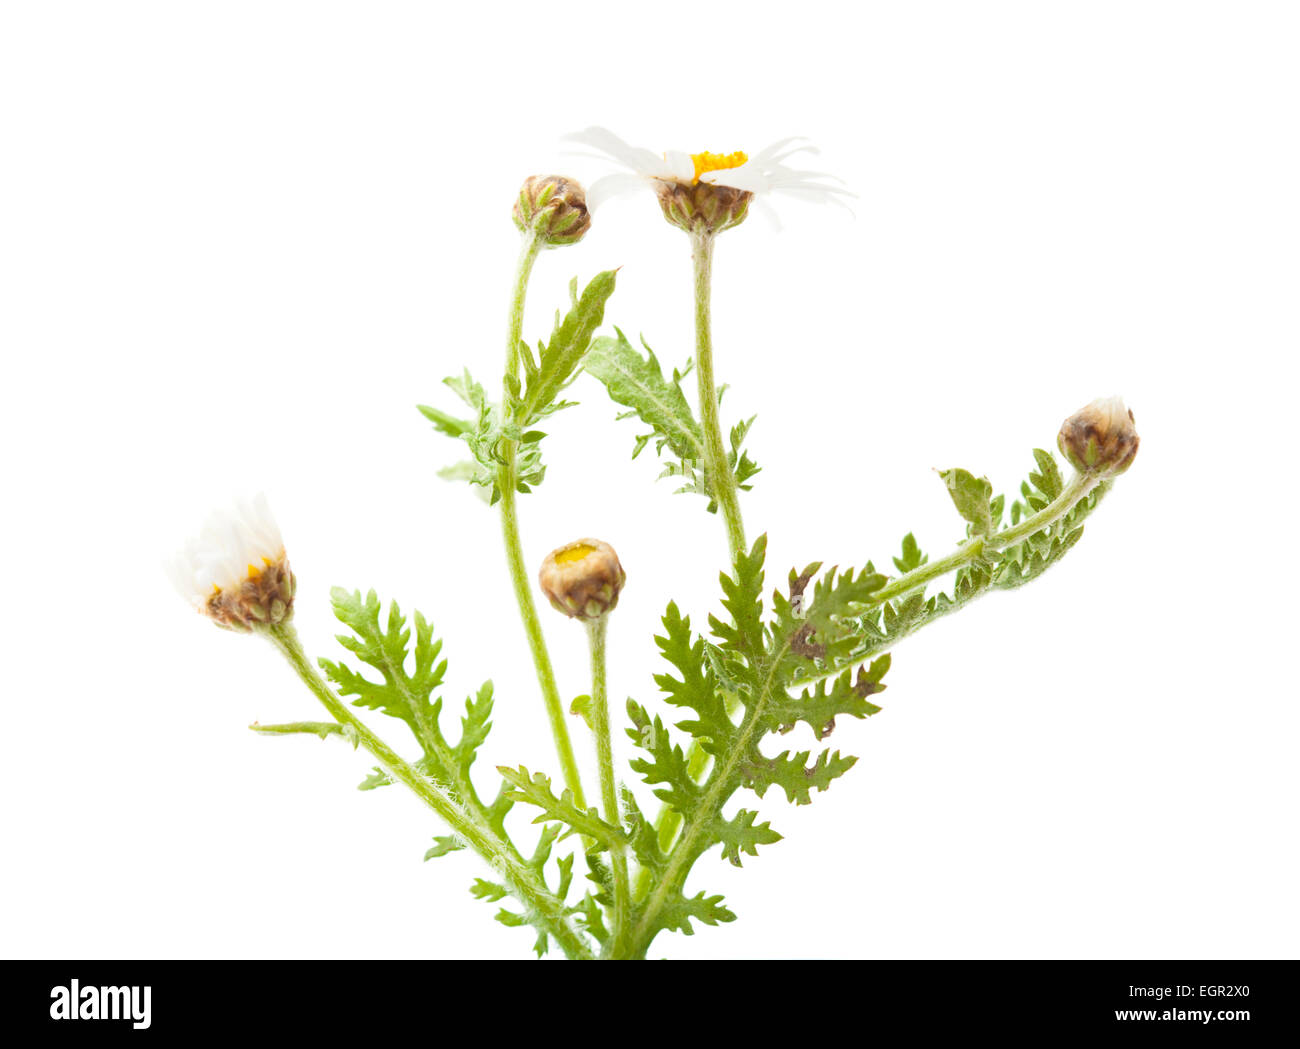 Argyranthemum adauctum, canarian marguerite daisy flower isolated on white background Stock Photo